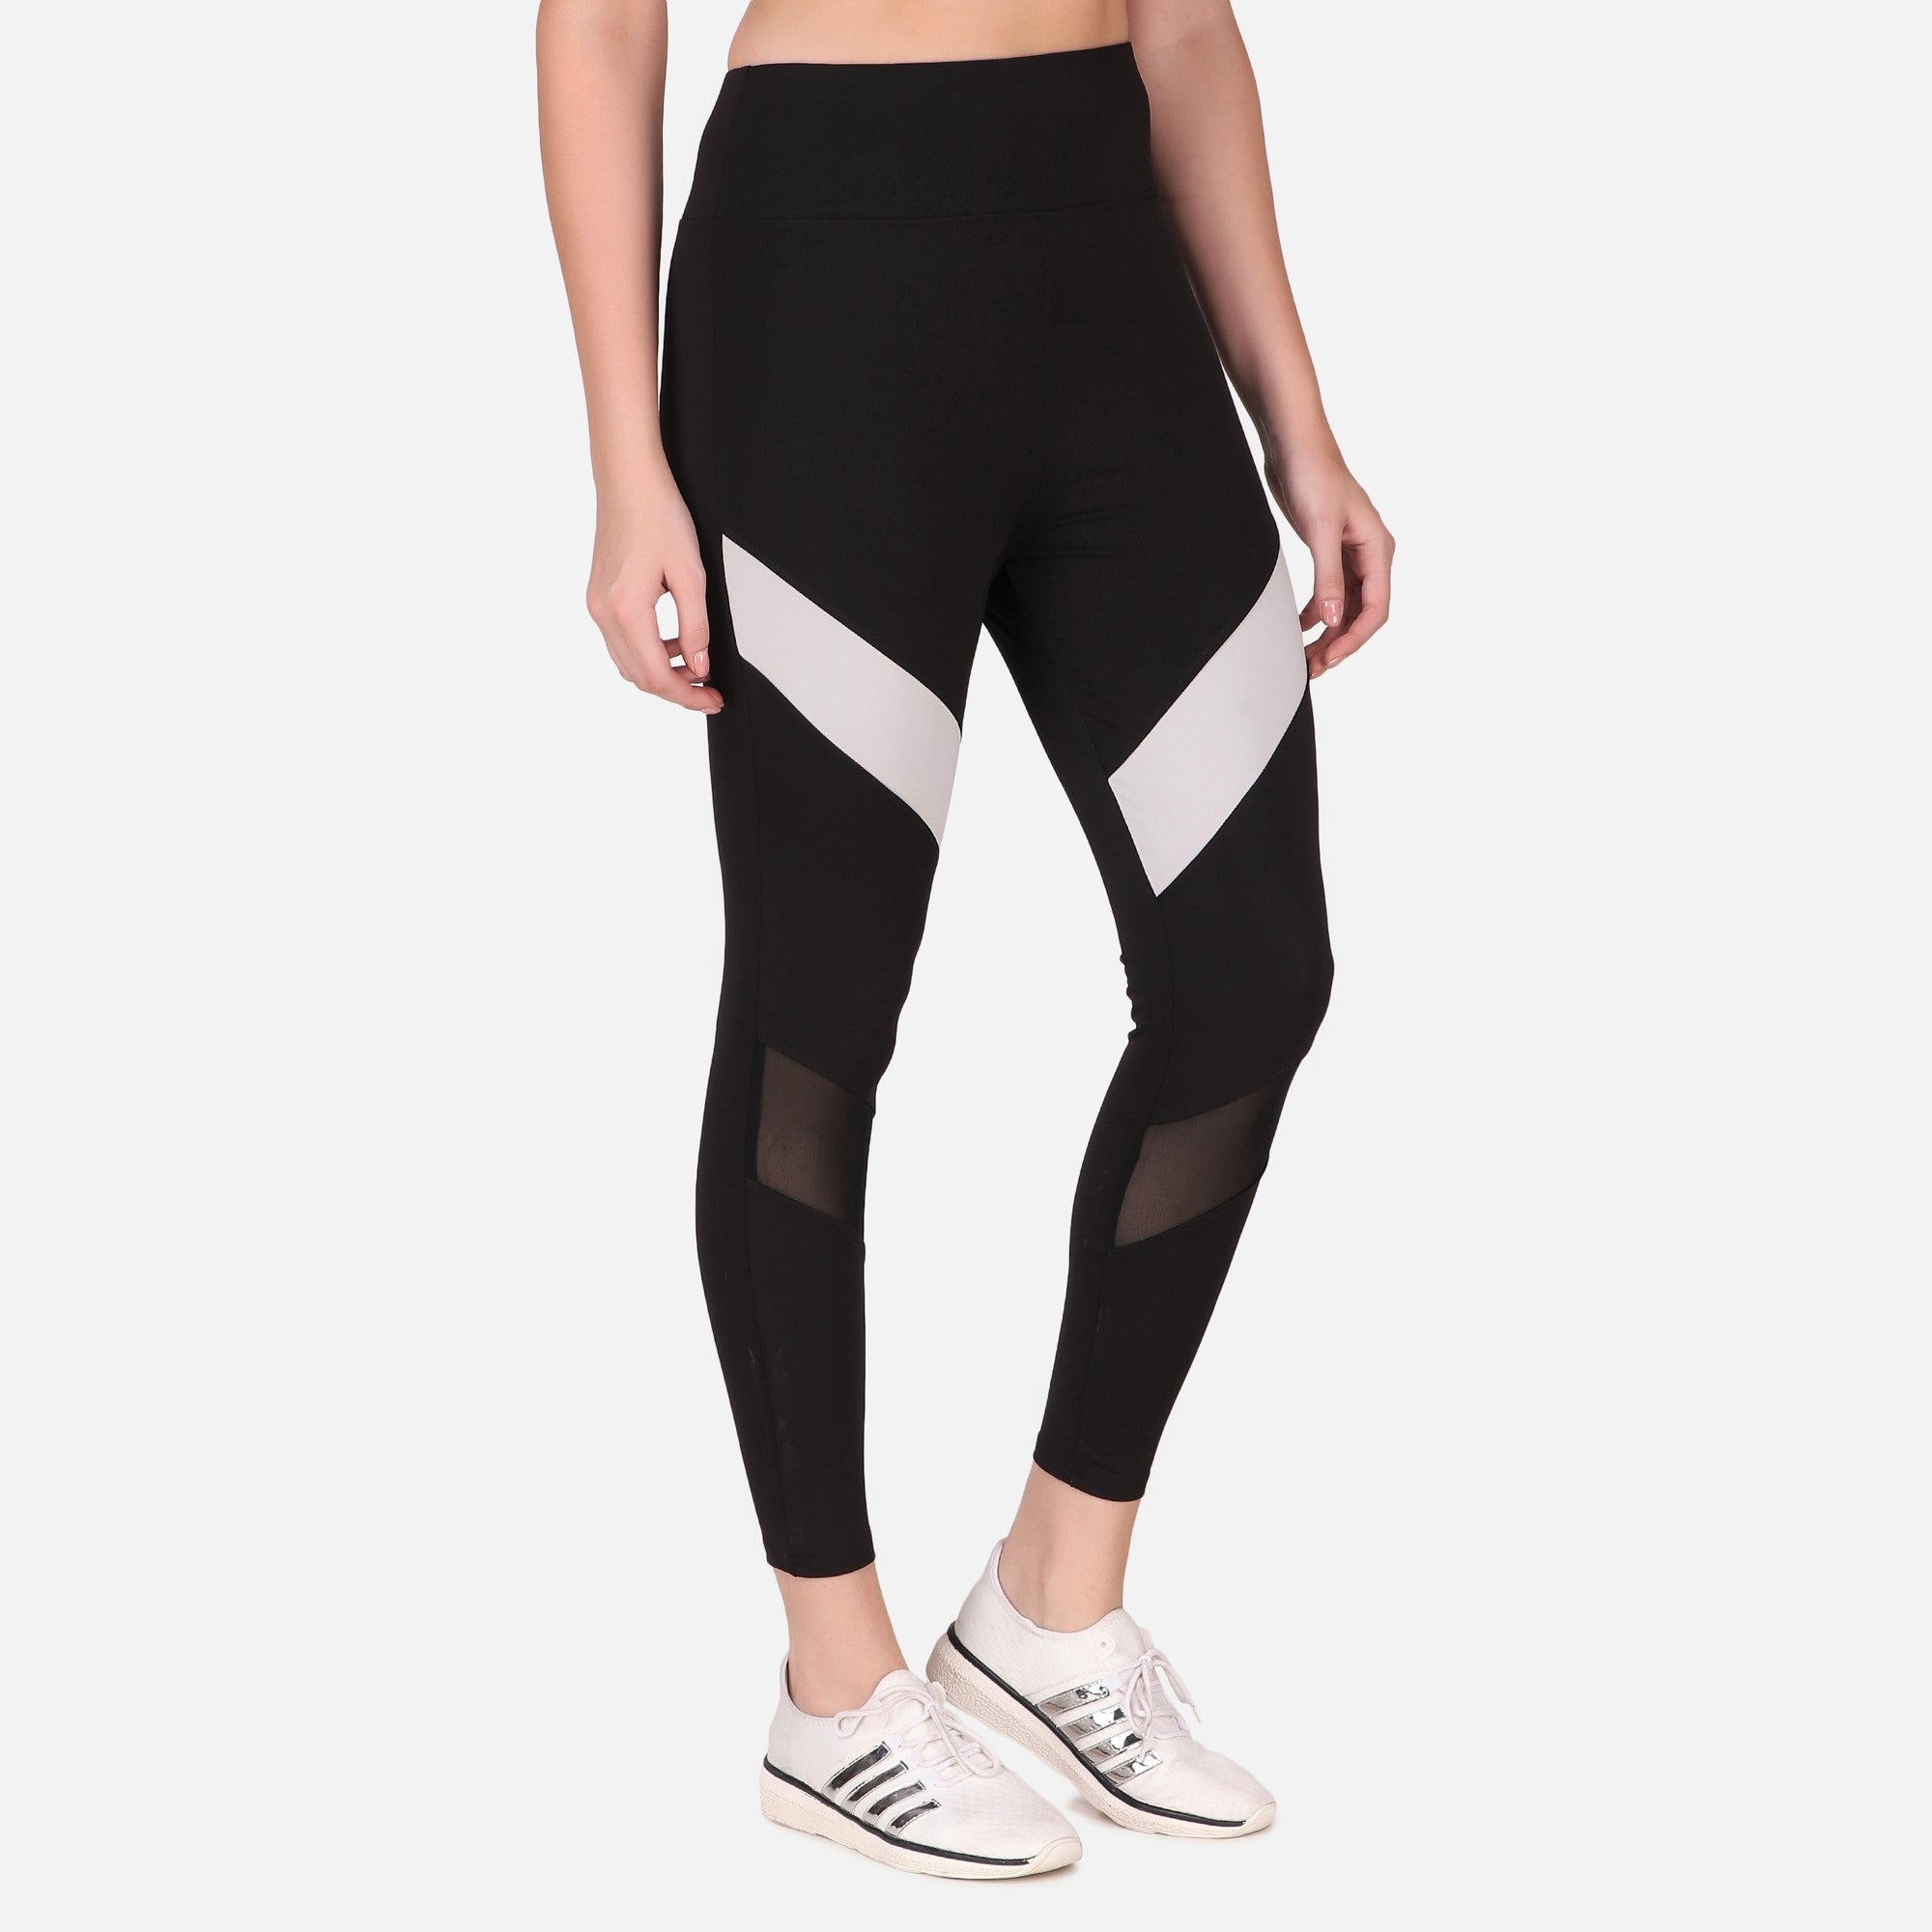 Women Ankle Length Skinny Leggings Black White Horizontal Striped Pants  Tights - Walmart.com